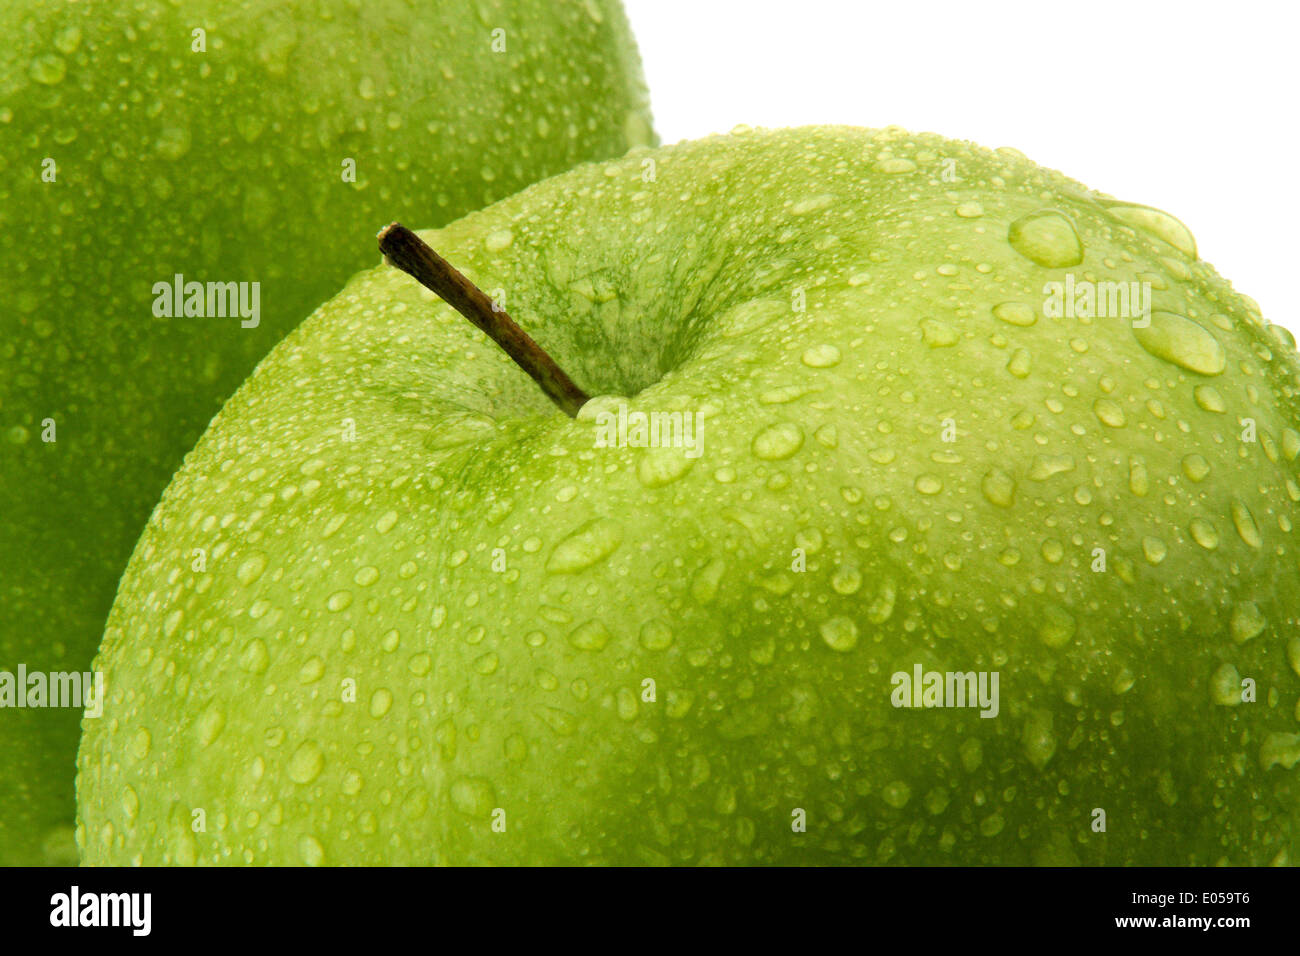 A green apple. Fruit for vitamins., Ein gruener Apfel. Obst fuer Vitamine. Stock Photo